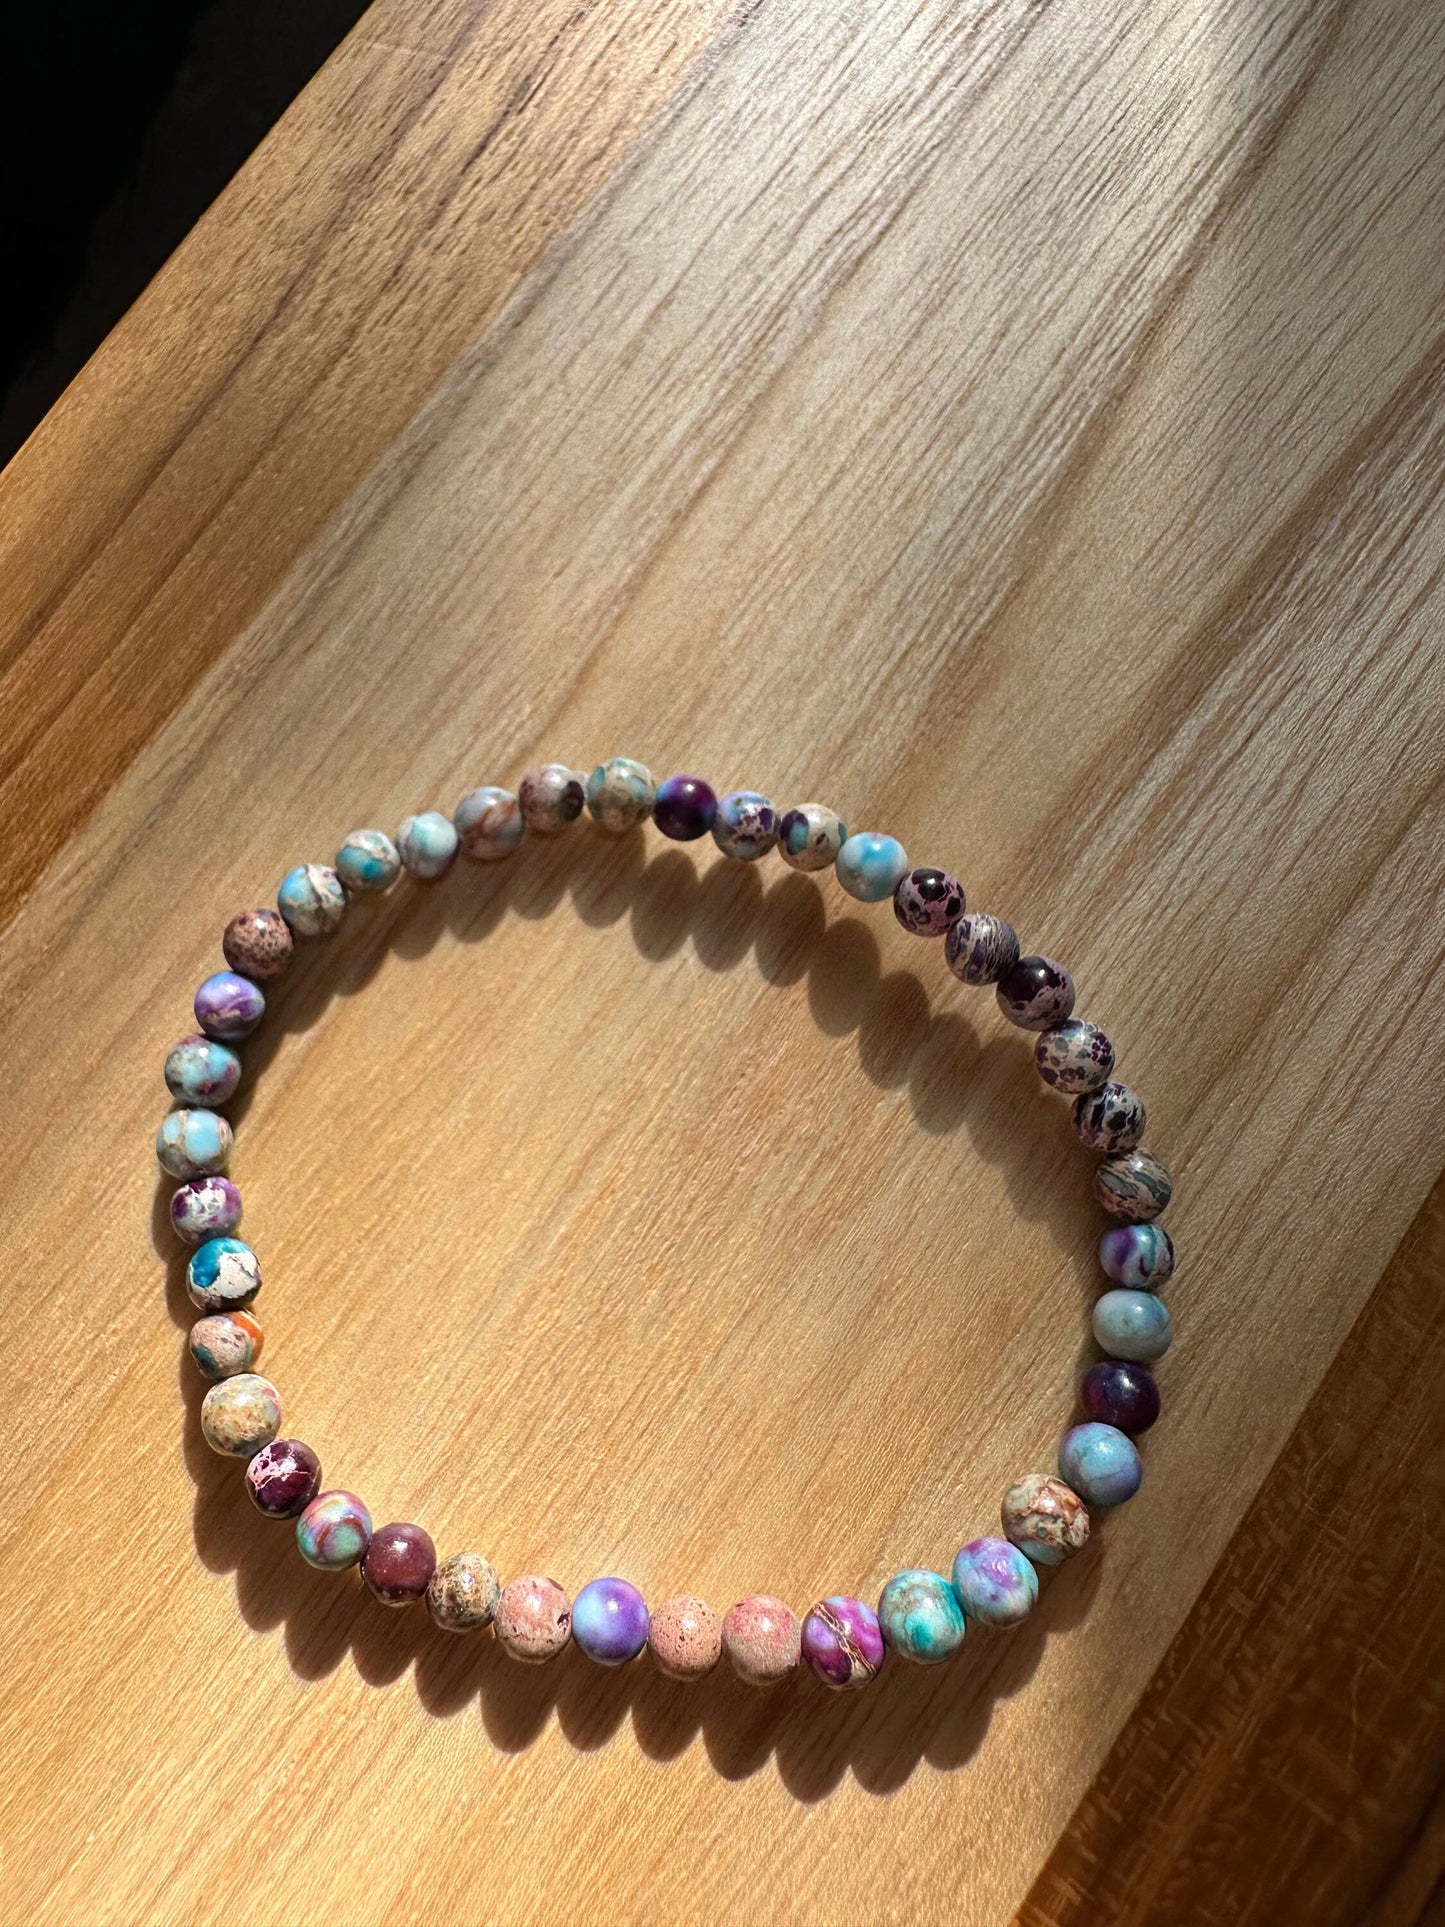 Galaxy Sea Sediment Jasper, AKA Imperial Jasper, bracelet, jewelry, stretch or adjustable bracelet, colorful small stones, chakra, Boho